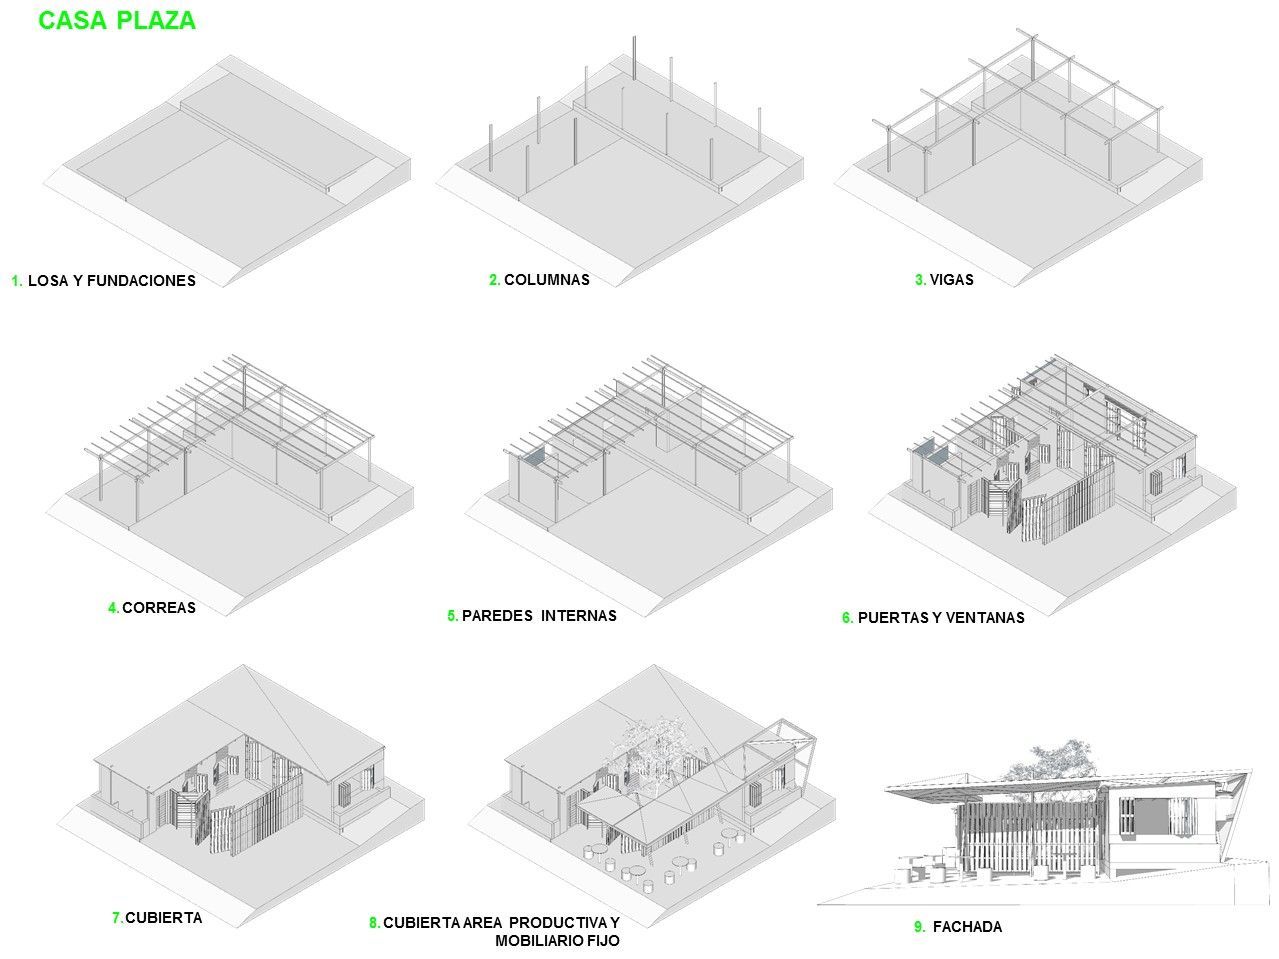 Casa Plaza (Vivienda Barrial Productiva), Taller de Desarrollo Urbano Taller de Desarrollo Urbano Minimalistyczne domy